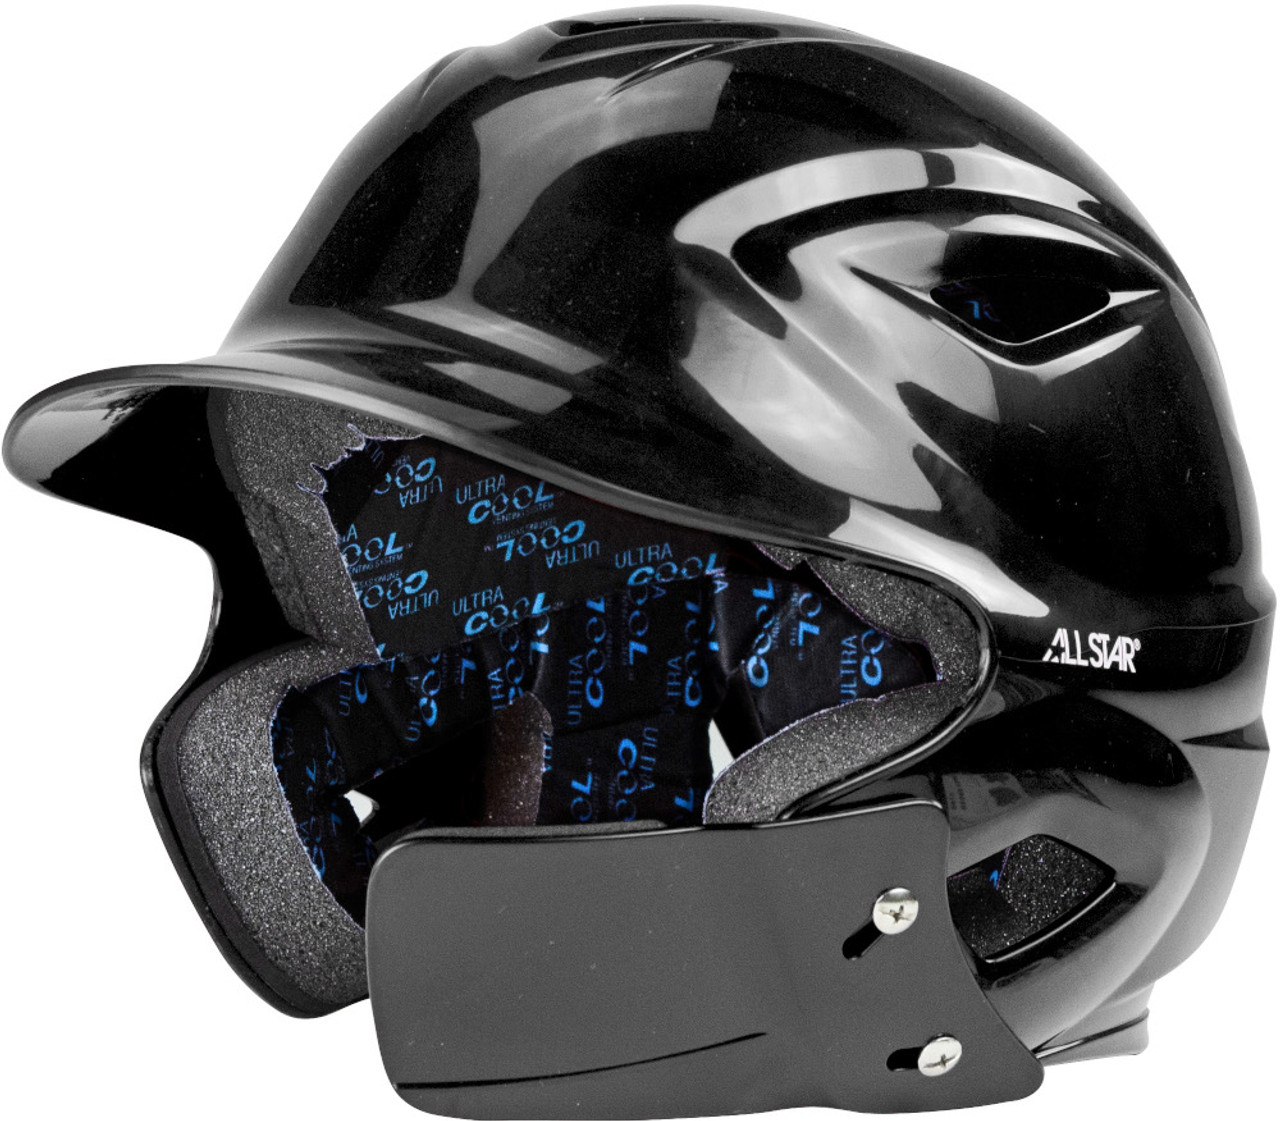 All-Star System 7 Catcher's Helmet Adult/HS